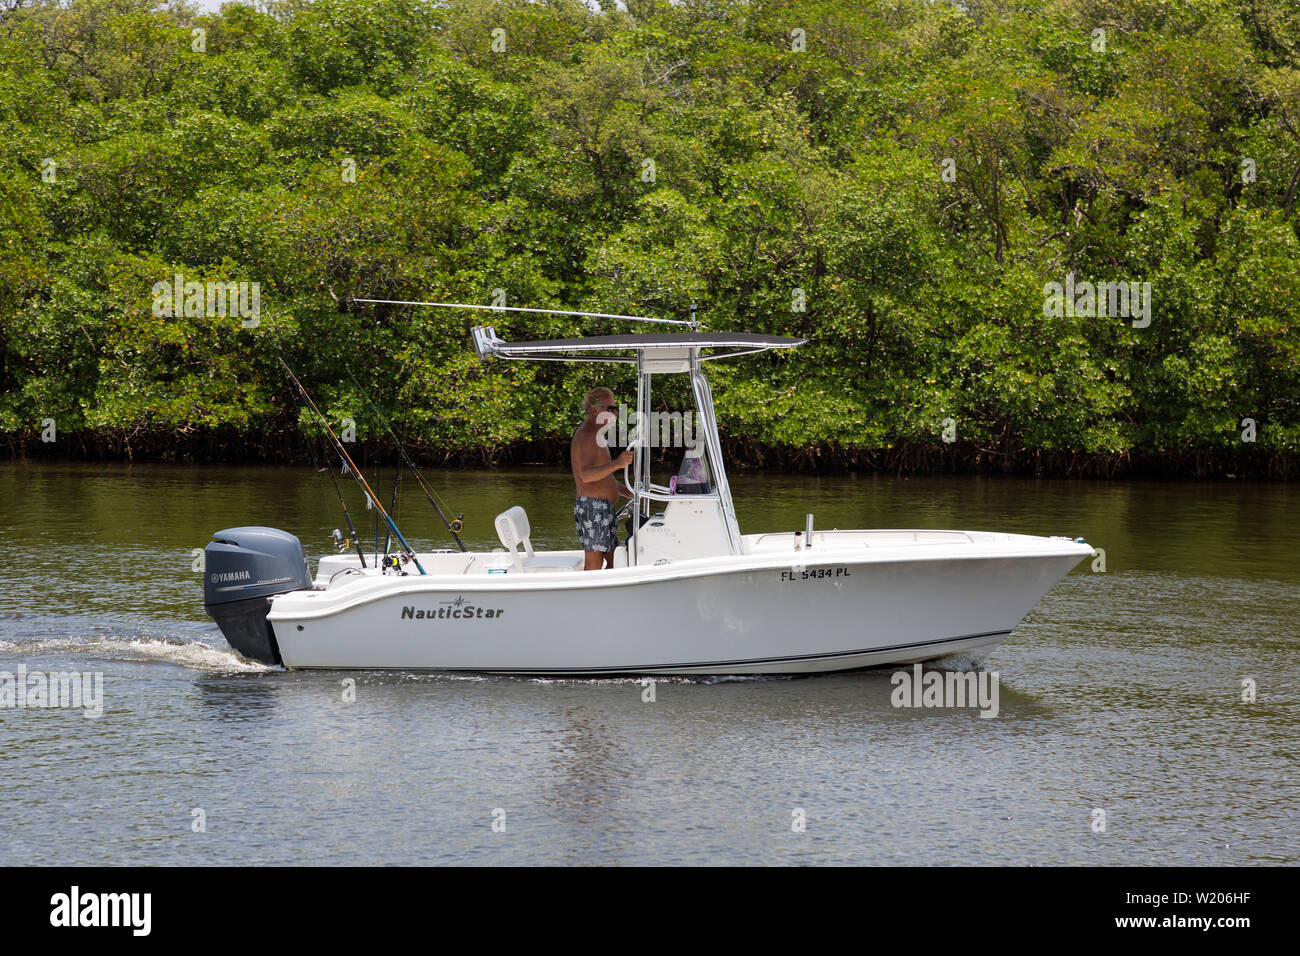 A fisherman pilots his NauticStar fishing boat through the calm waters of the Intercoastal Waterway between Boynton Beach & Ocean Ridge, Florida, USA Stock Photo